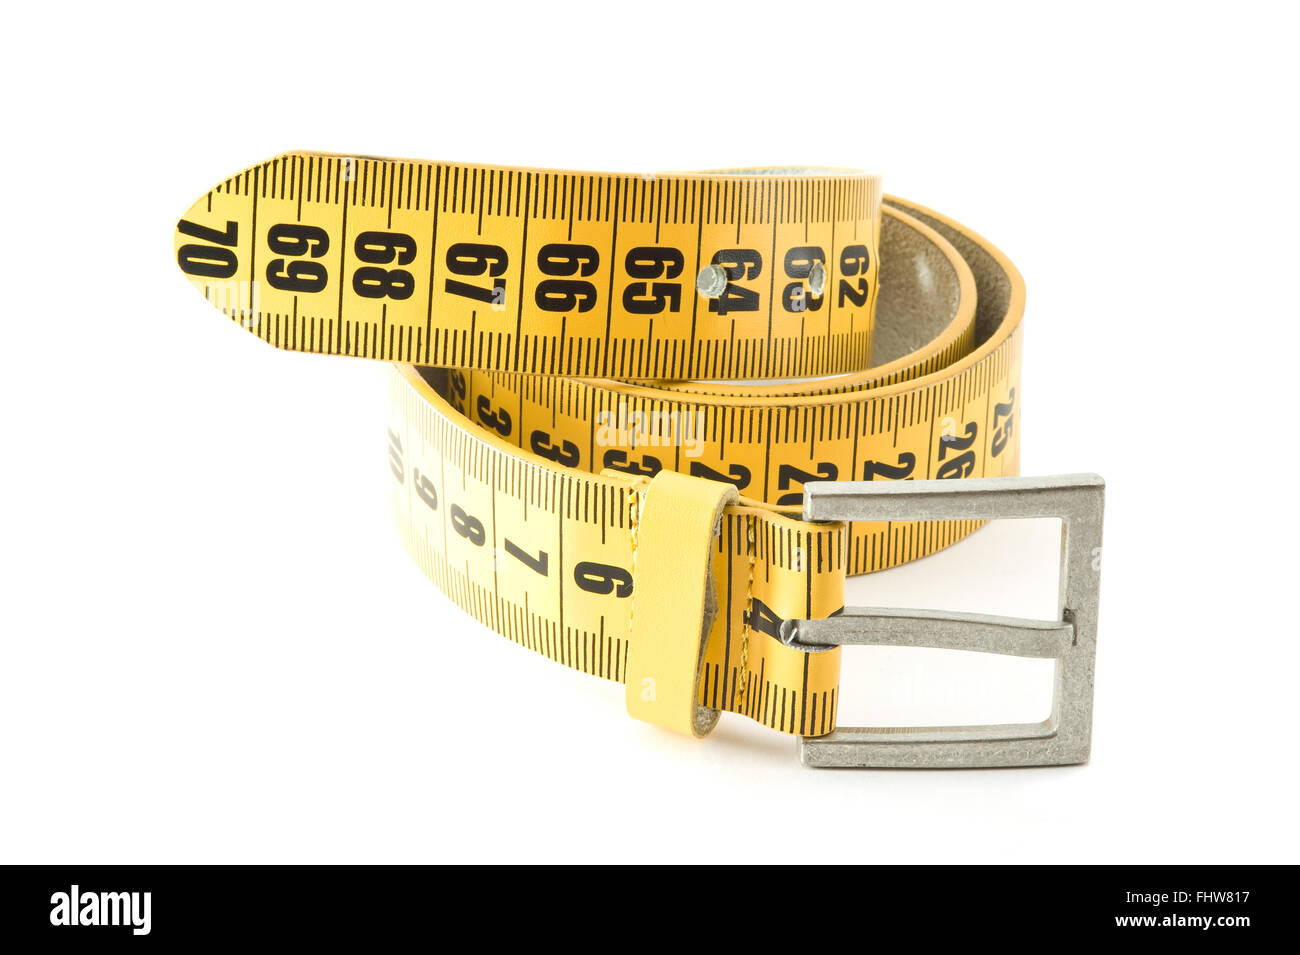 meter belt slimming Stock Photo